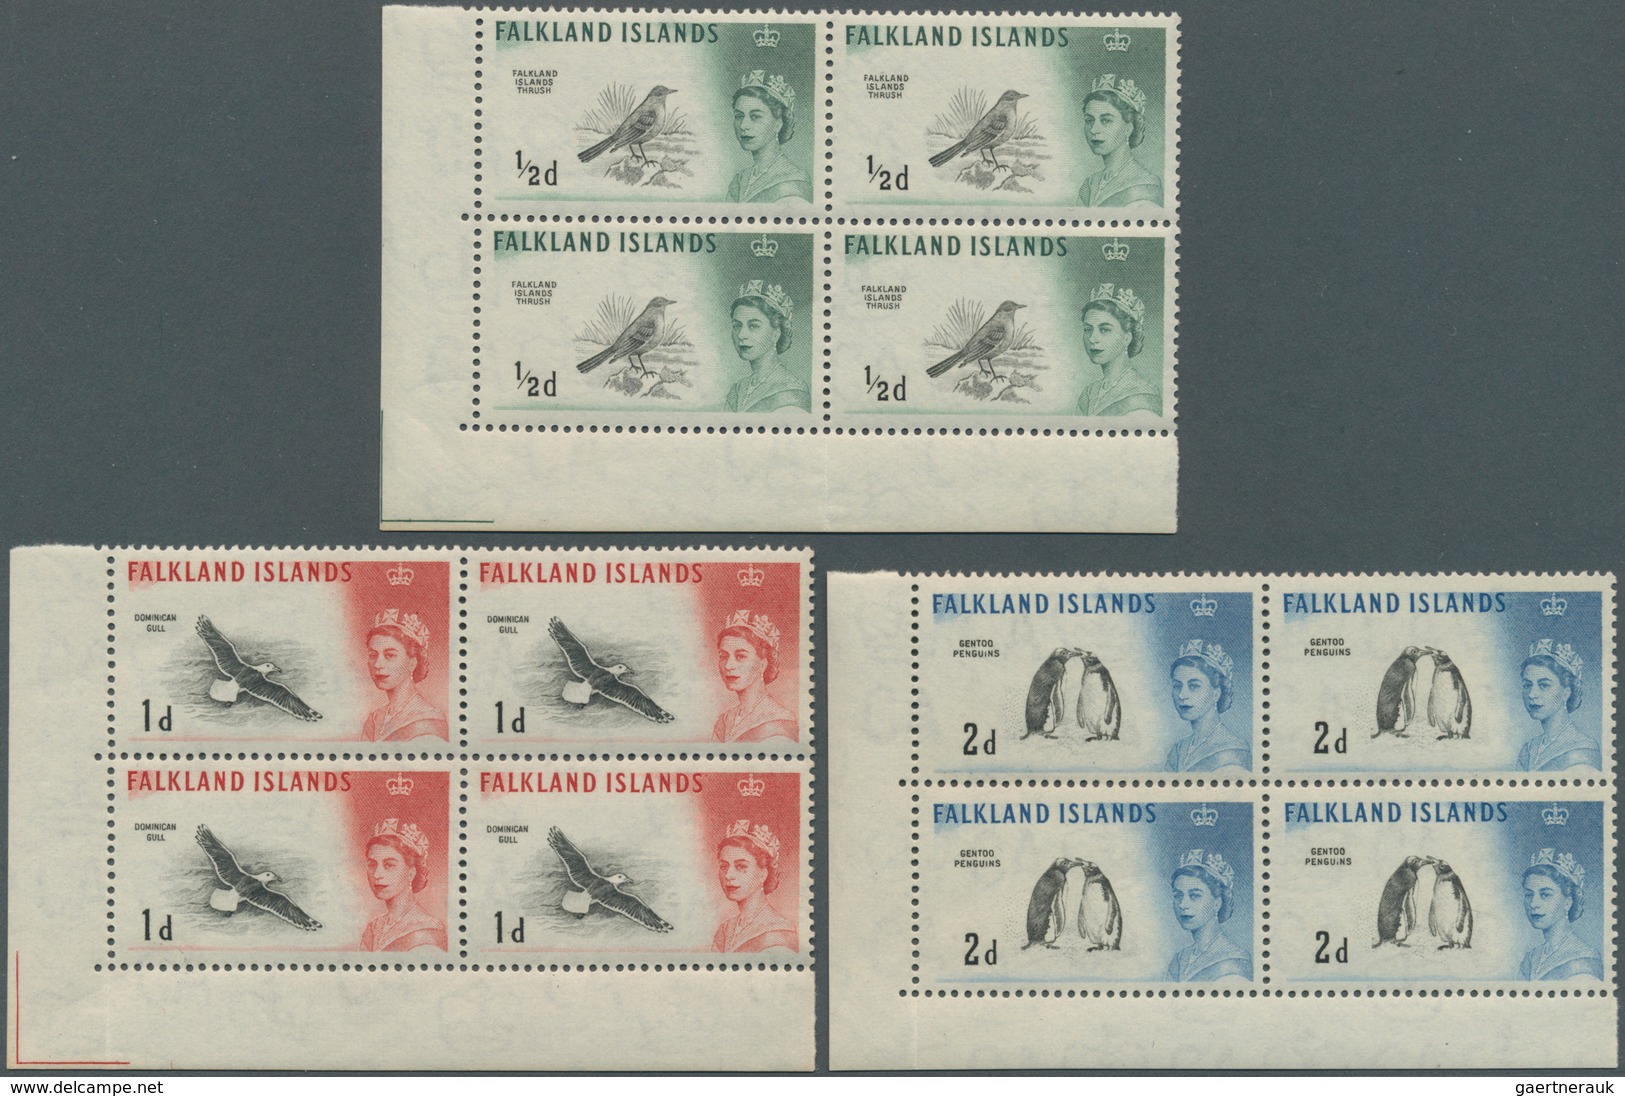 11921 Falklandinseln: 1960, definitives ½ d to 1 £ "Queen Elisabeth II / Birds" all 15 values in blocks of